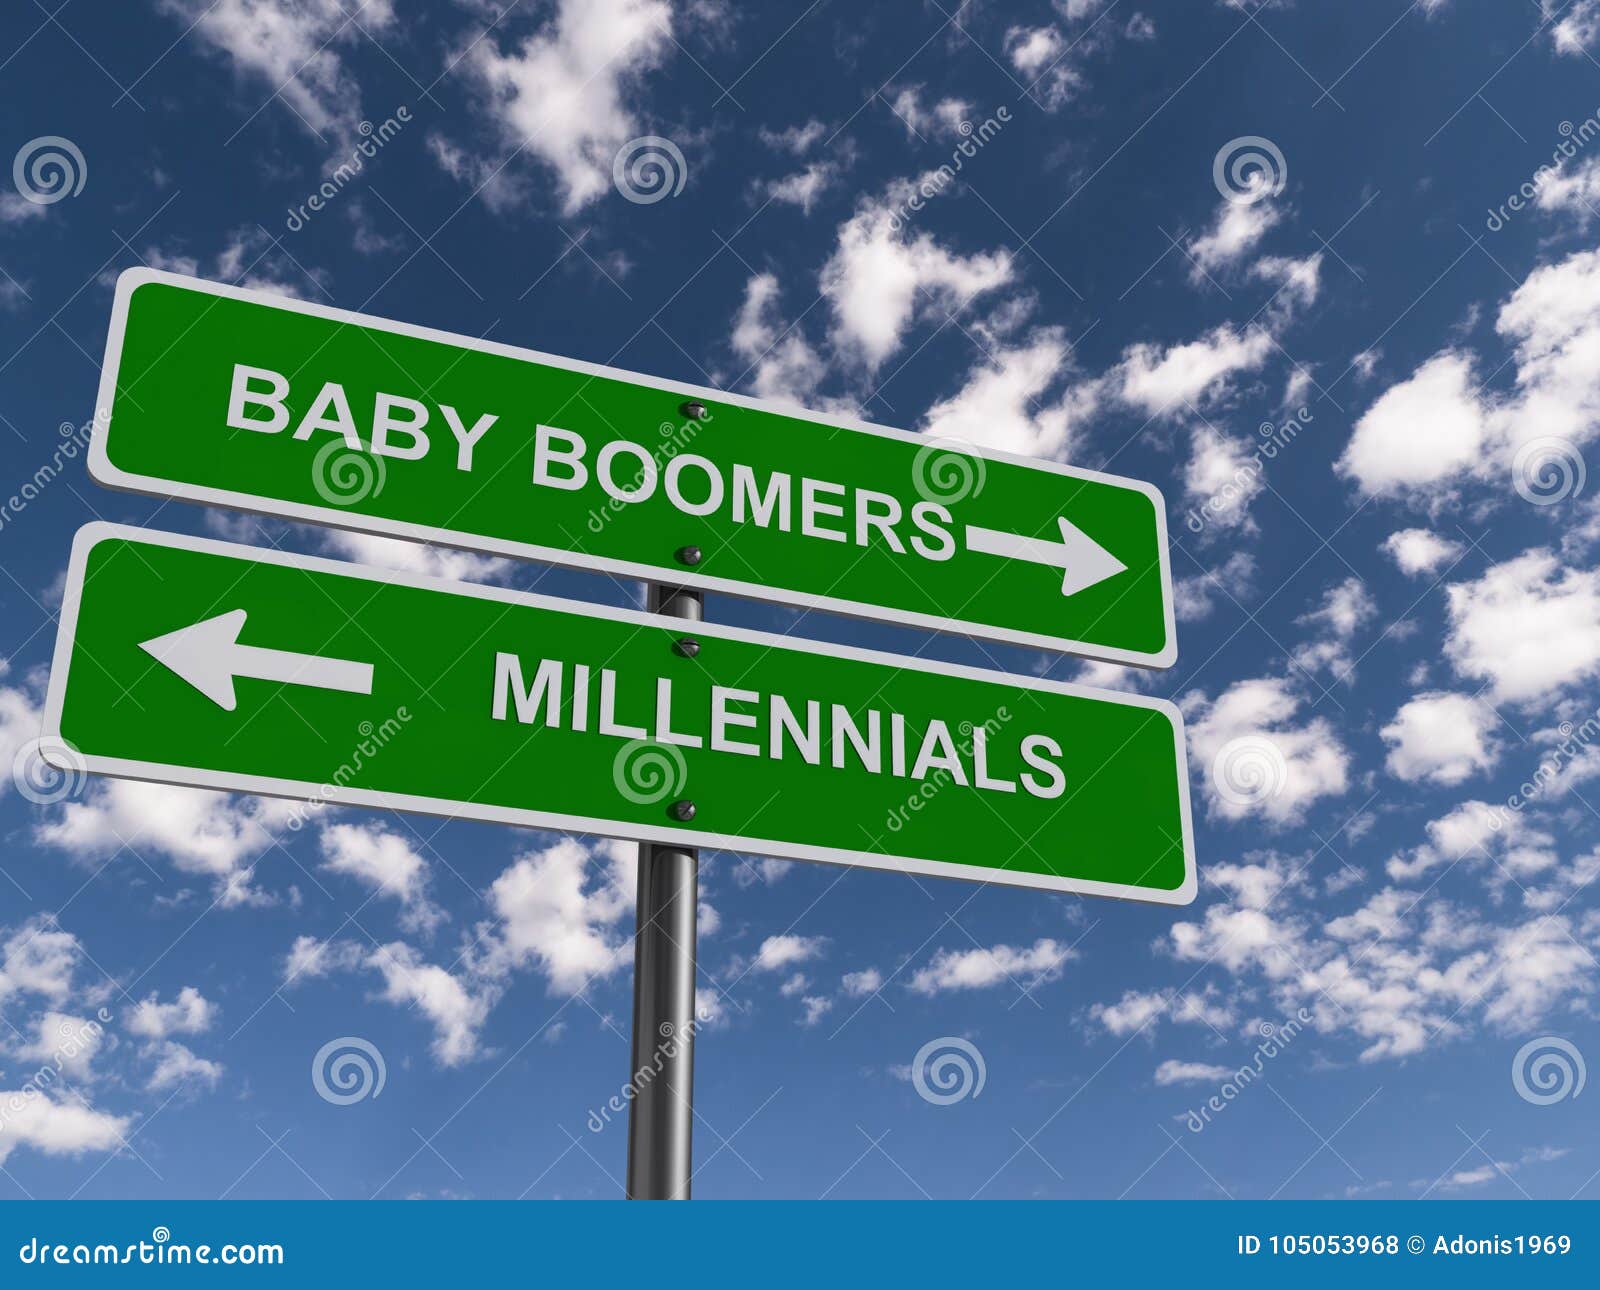 baby boomera and millennials